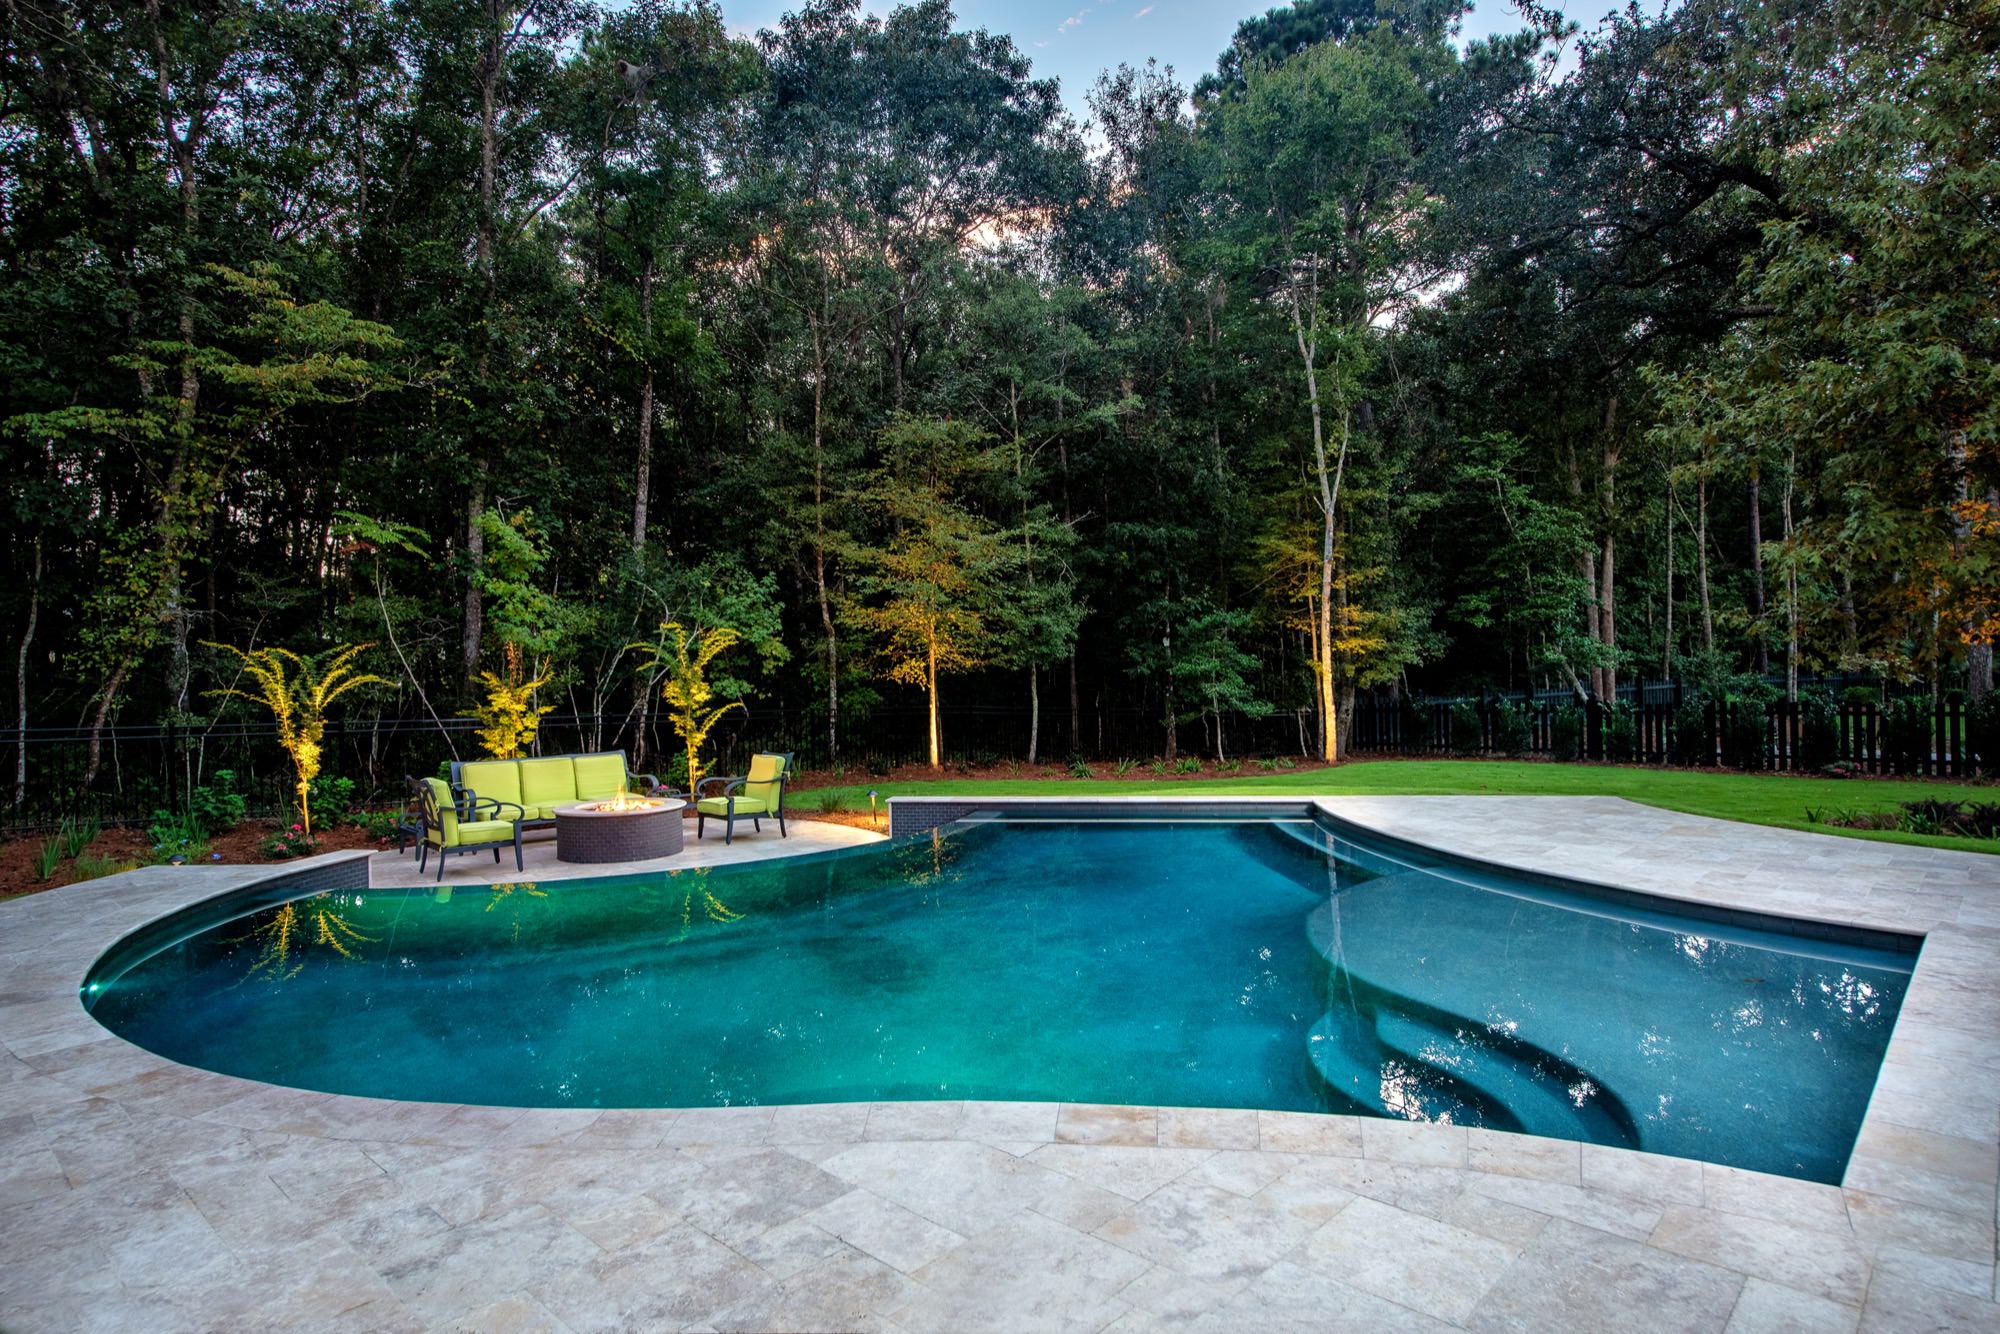 Freeform Swimming Pool Builders South Carolina Atkinson Pools